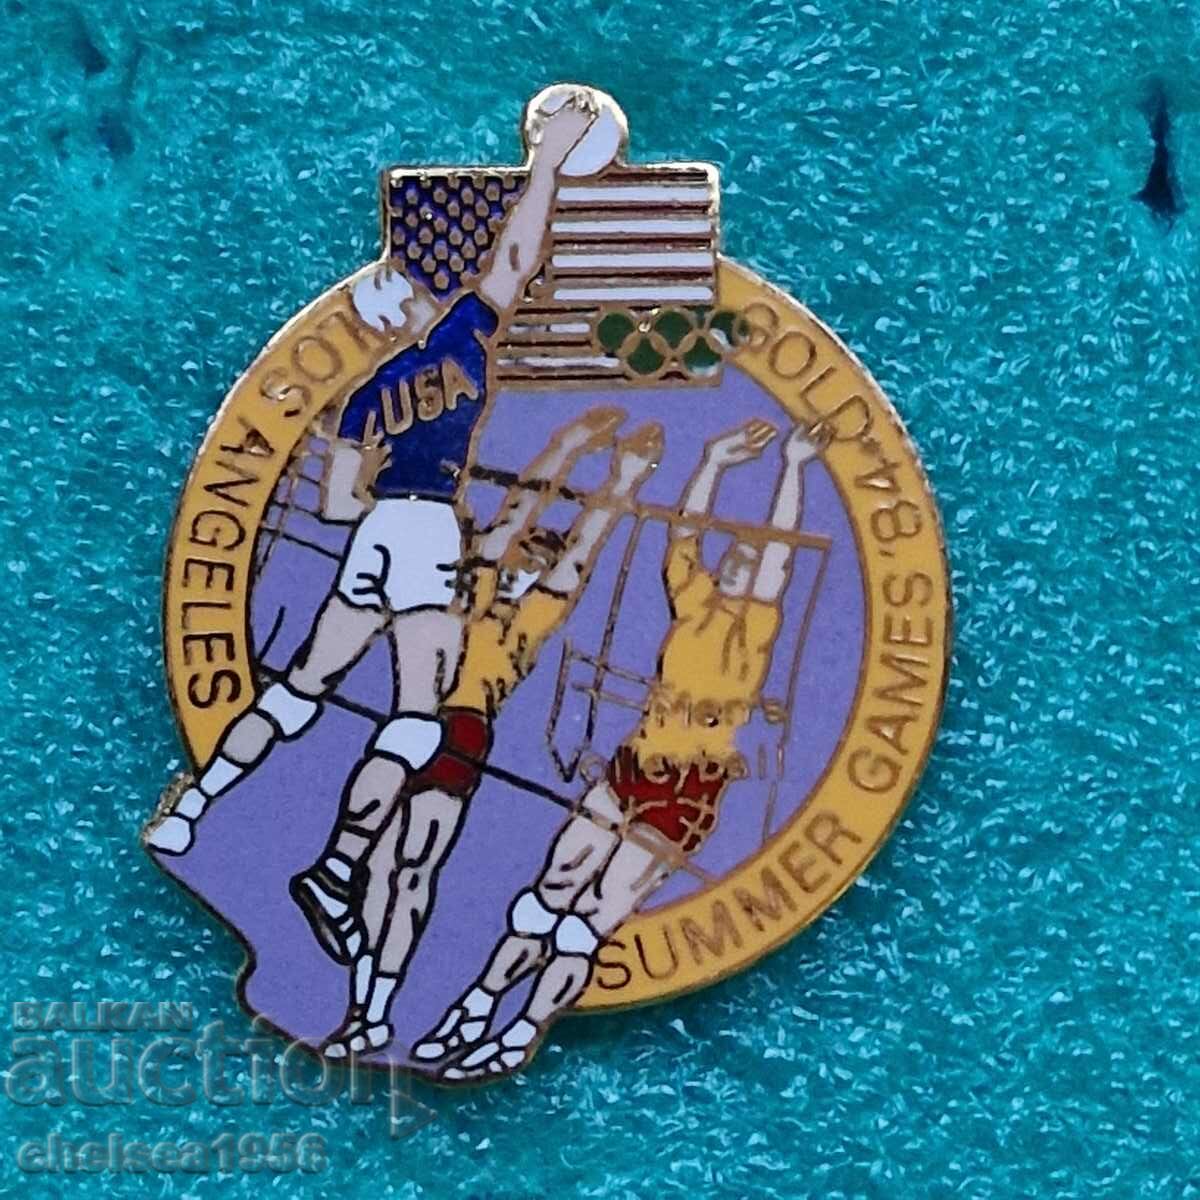 Los Angeles 1994 Summer Olympics Badge